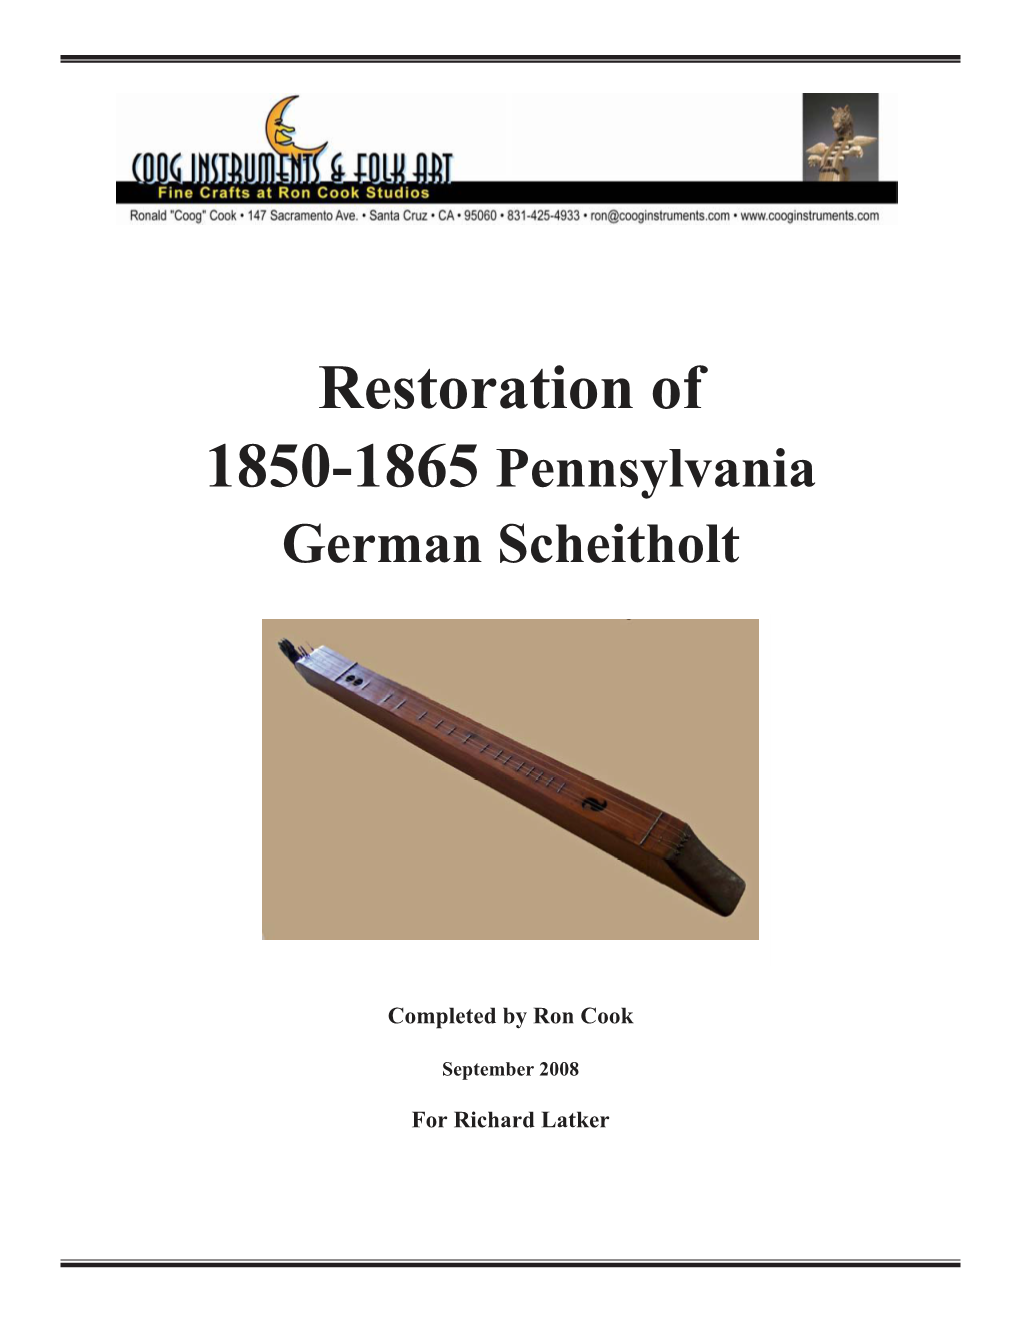 Restoration of 1850-1865 Pennsylvania German Scheitholt